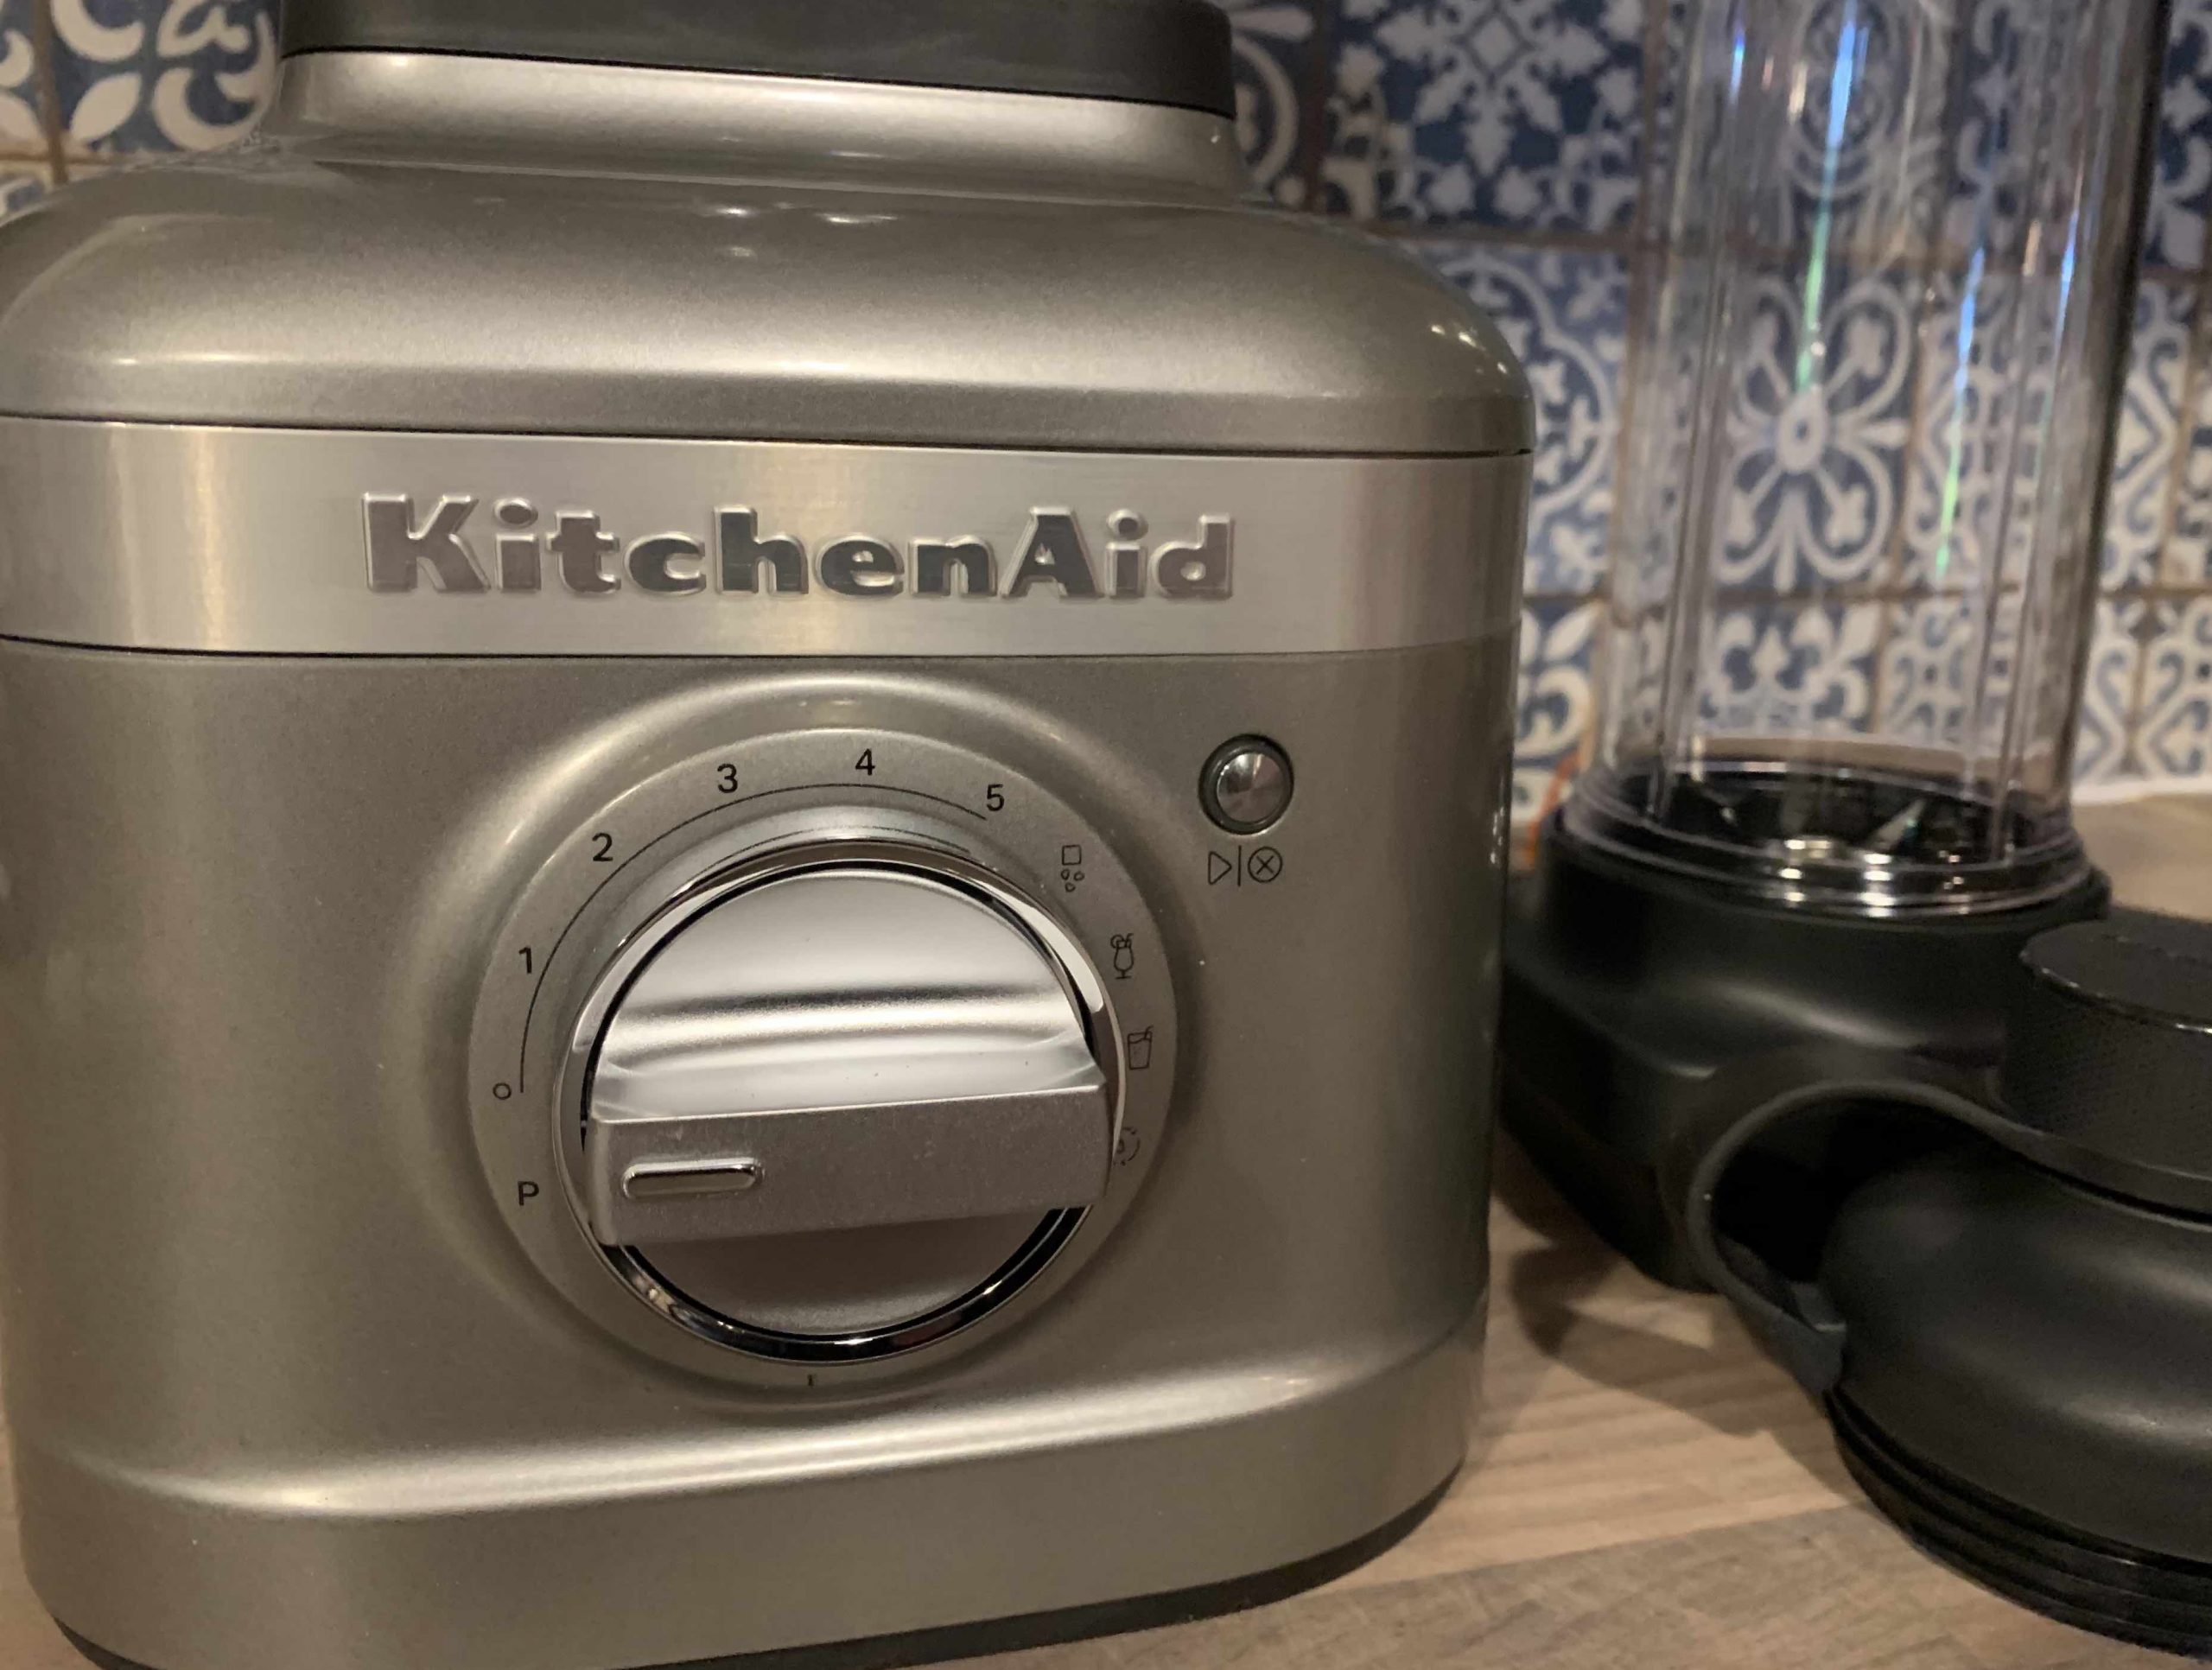 KitchenAid K400 Blender